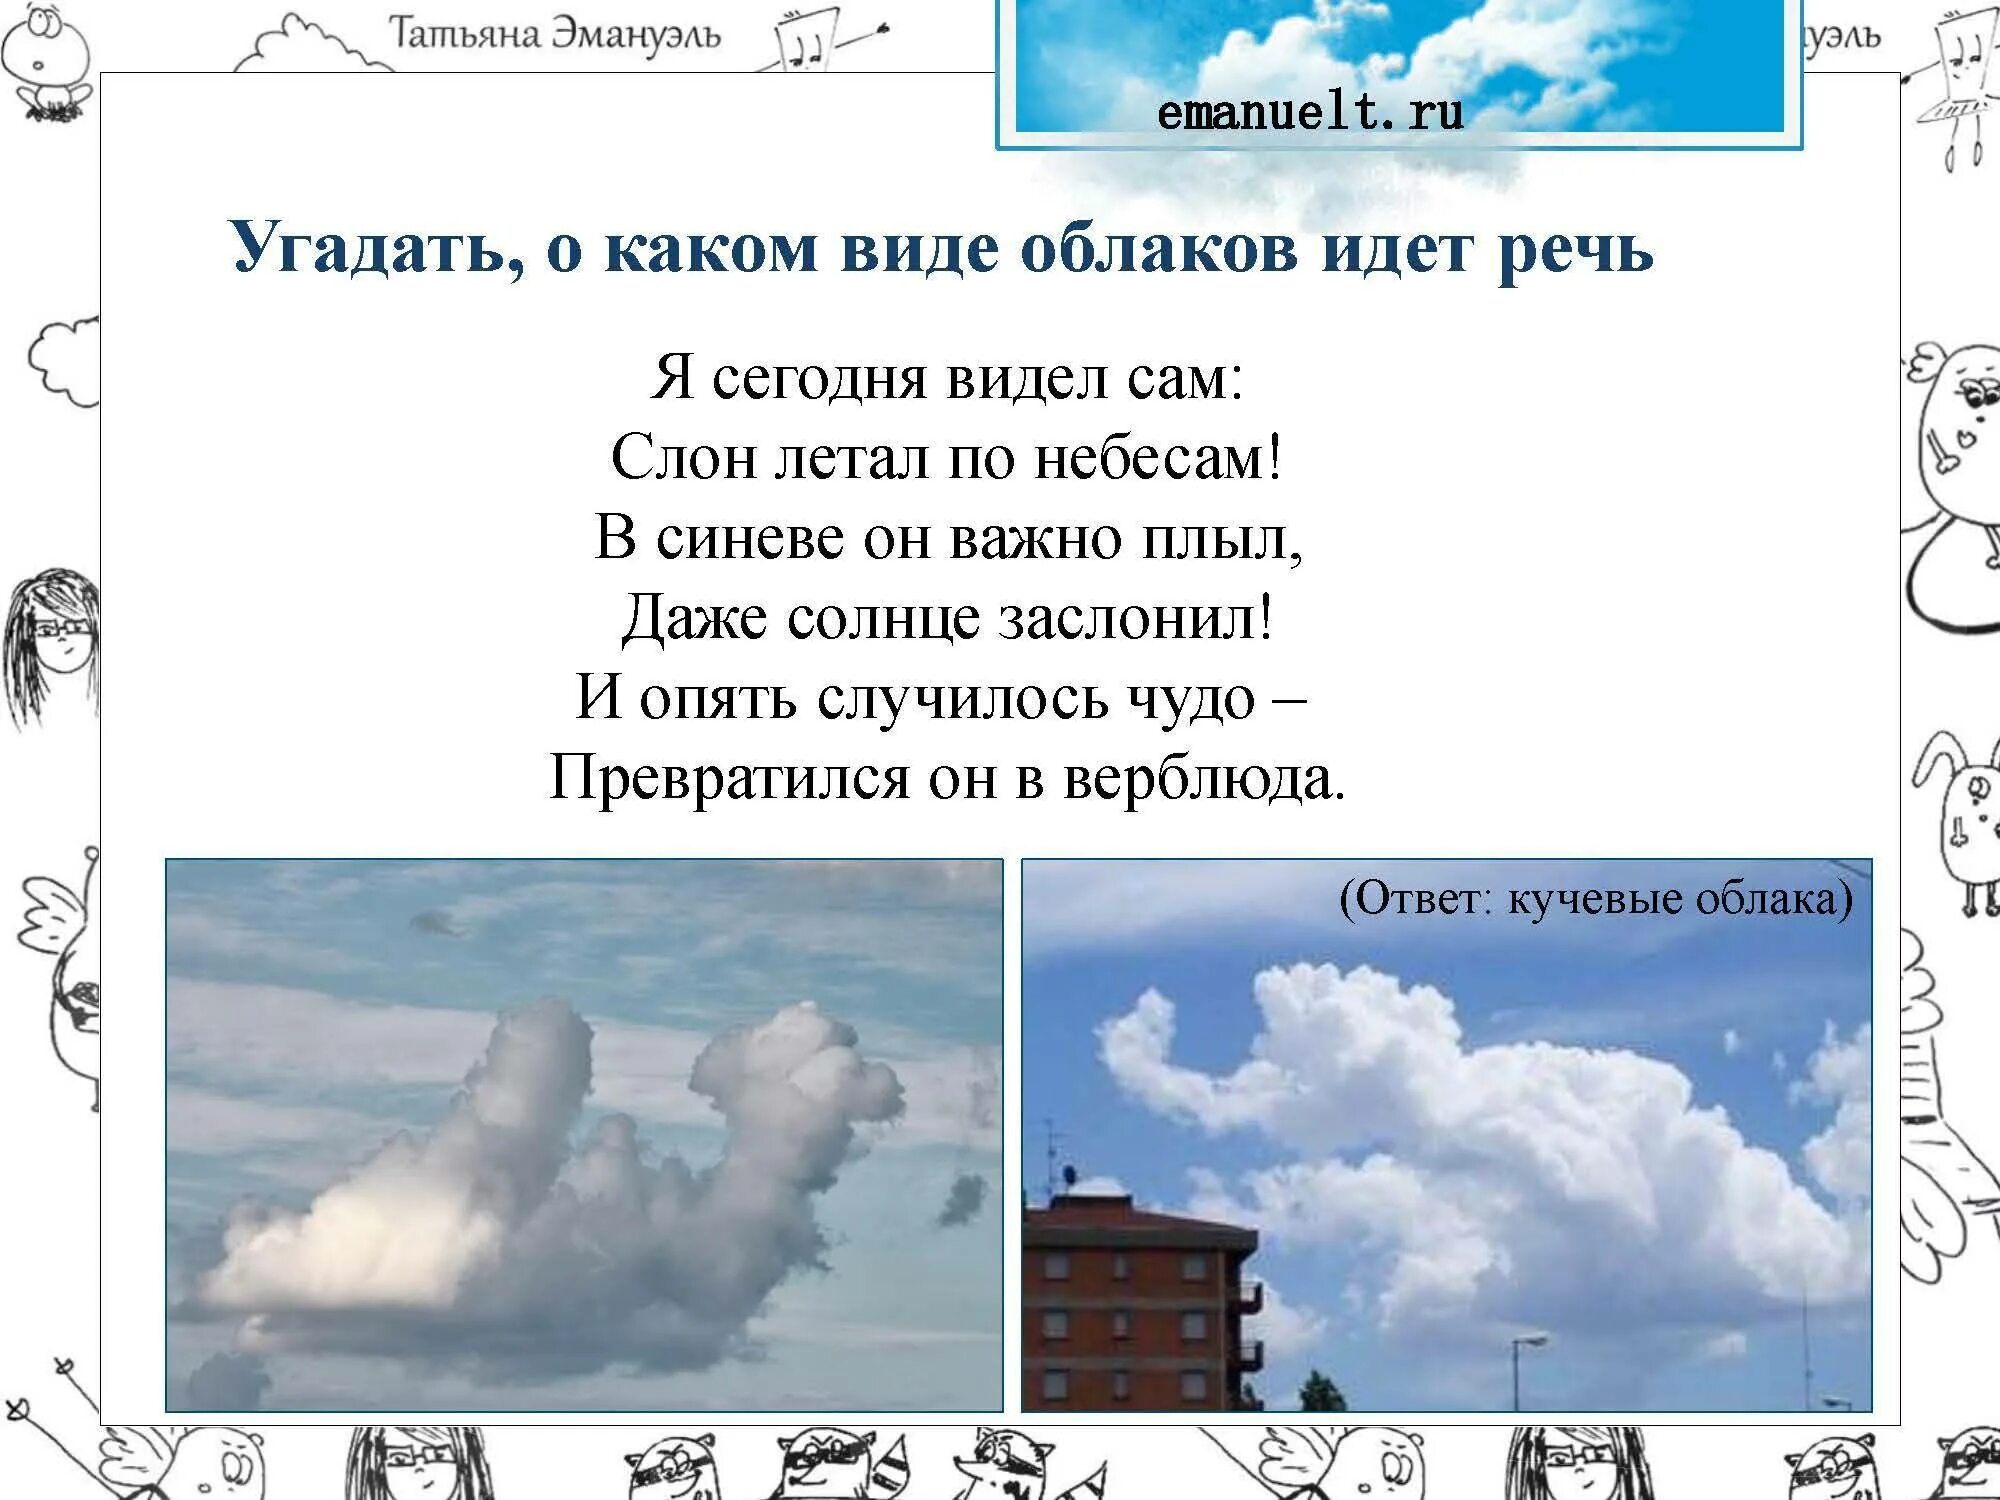 Облако 99 глава на русском. Стихи про облака. Загадки про облака. Детские стихи про облака. Загадка про облако для детей.